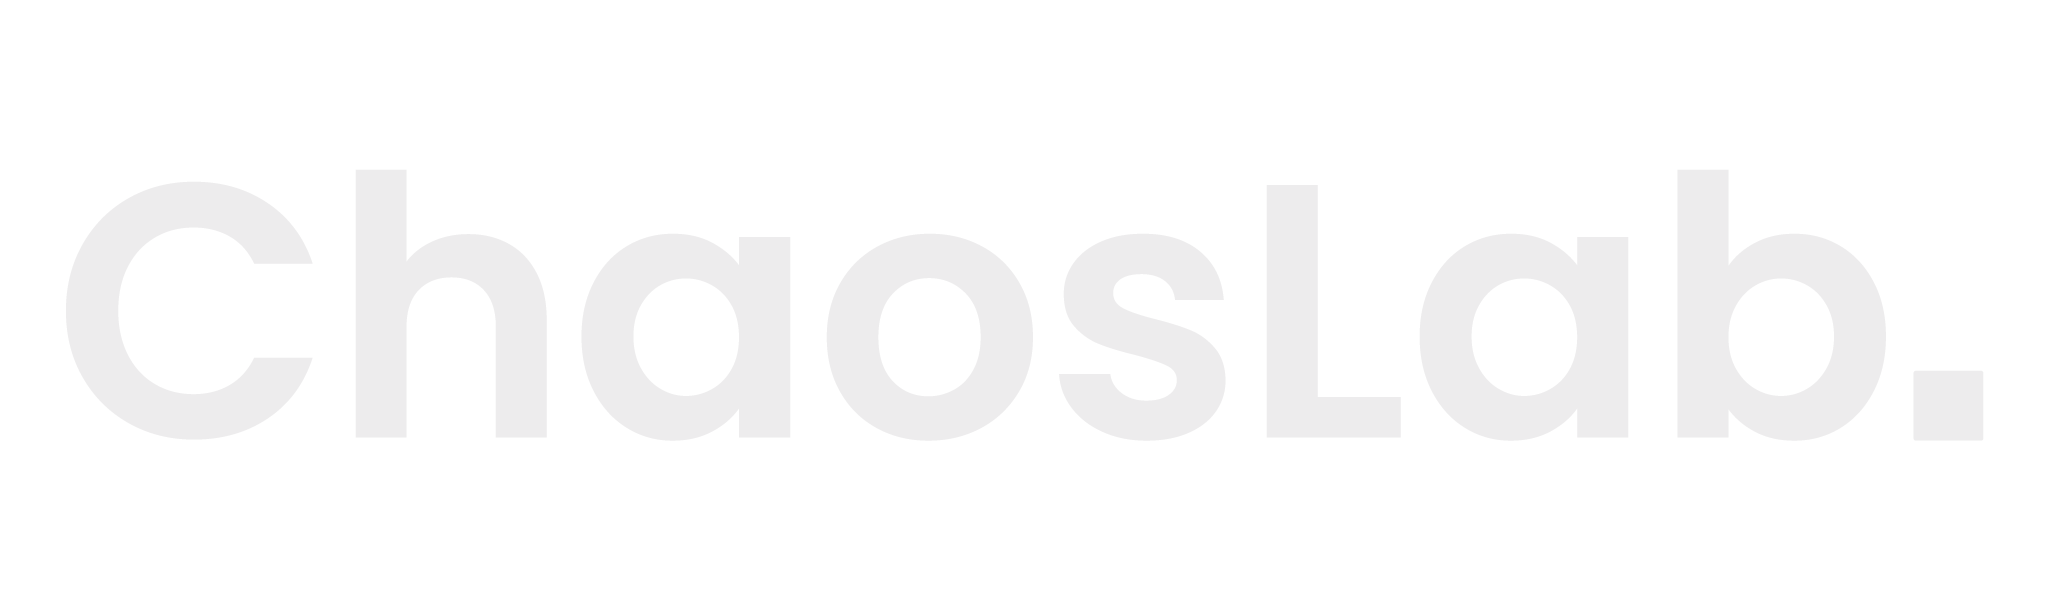 logo chaoslab